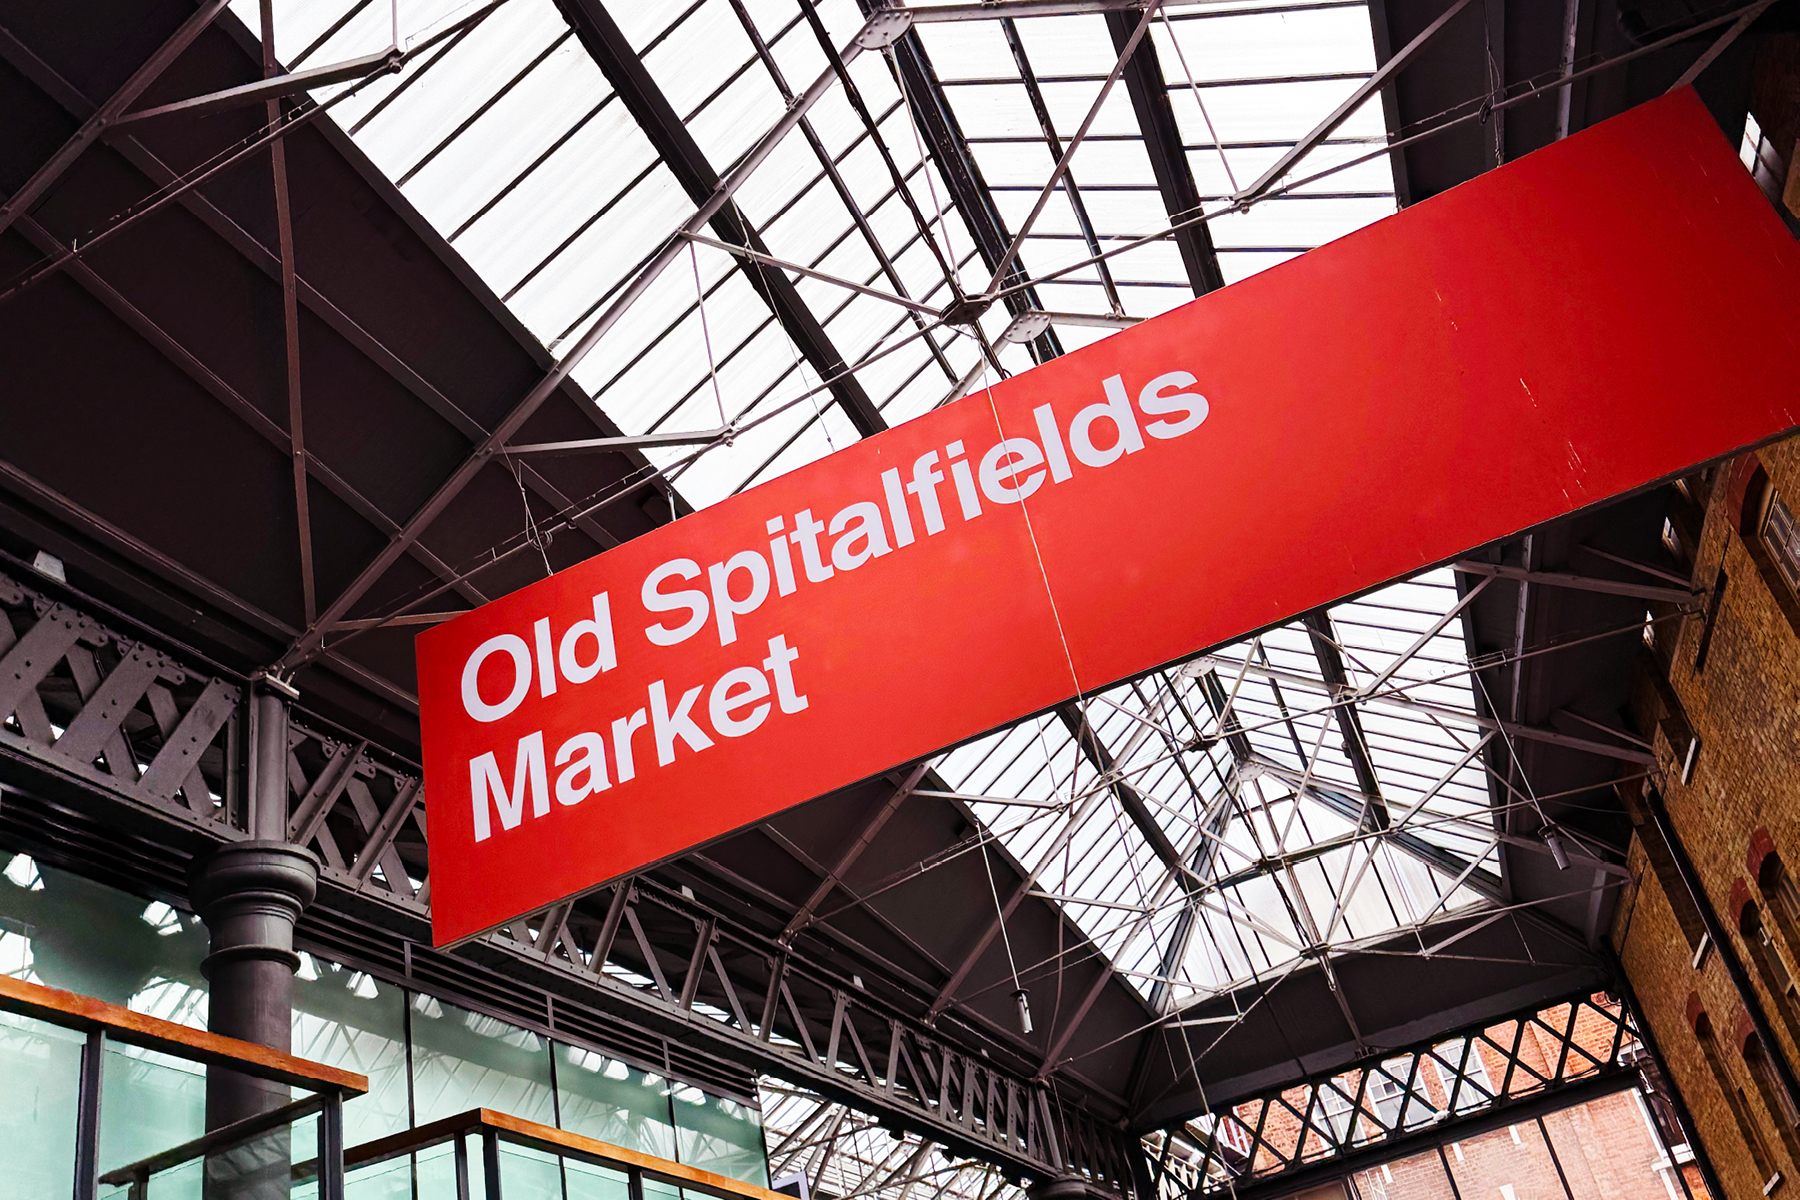 Spitalfields old market sign